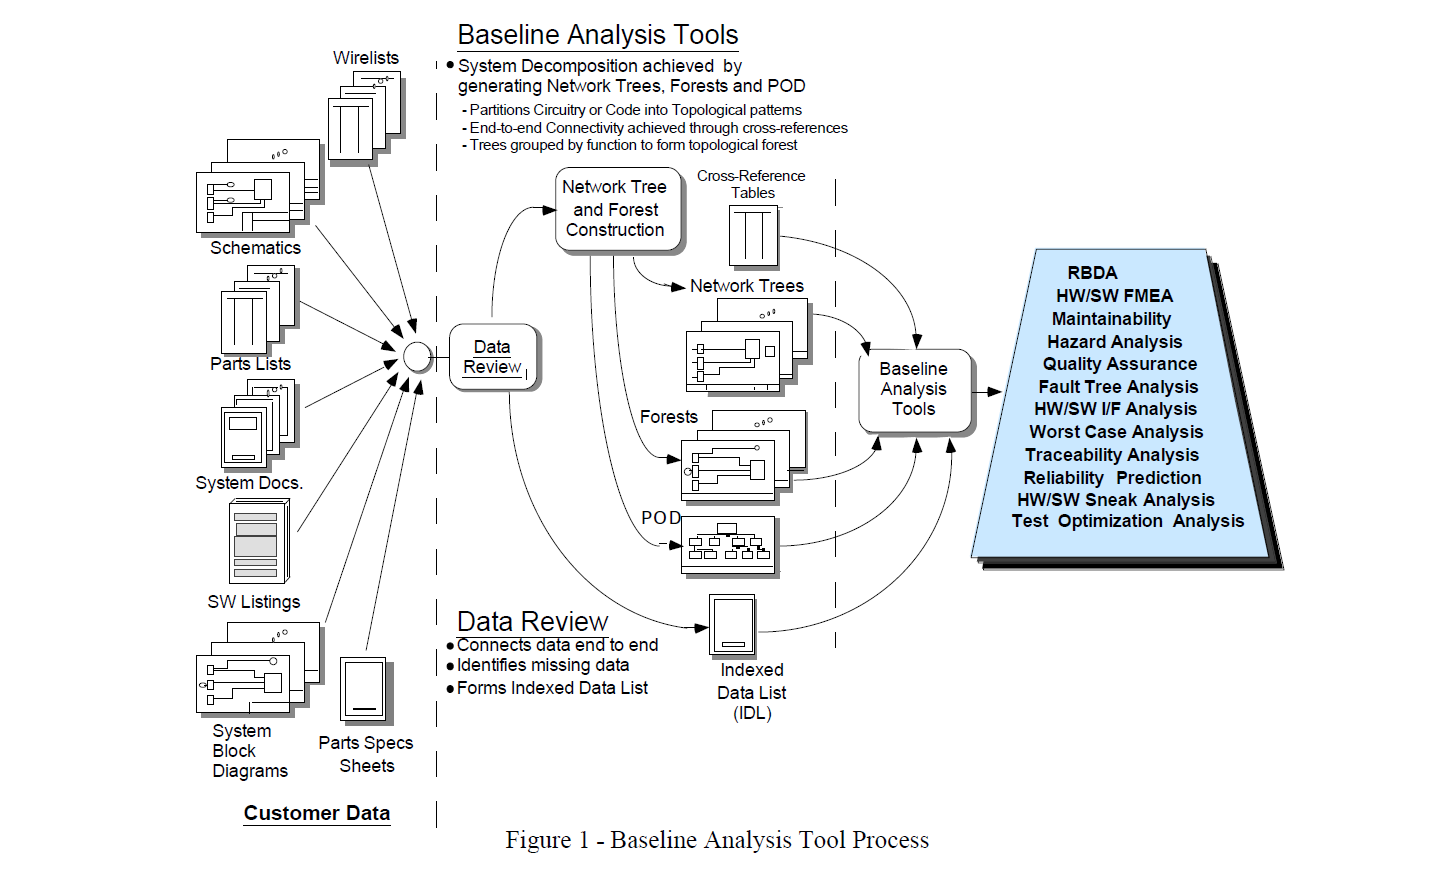 IDA Inc - Baseline Analysis Tools